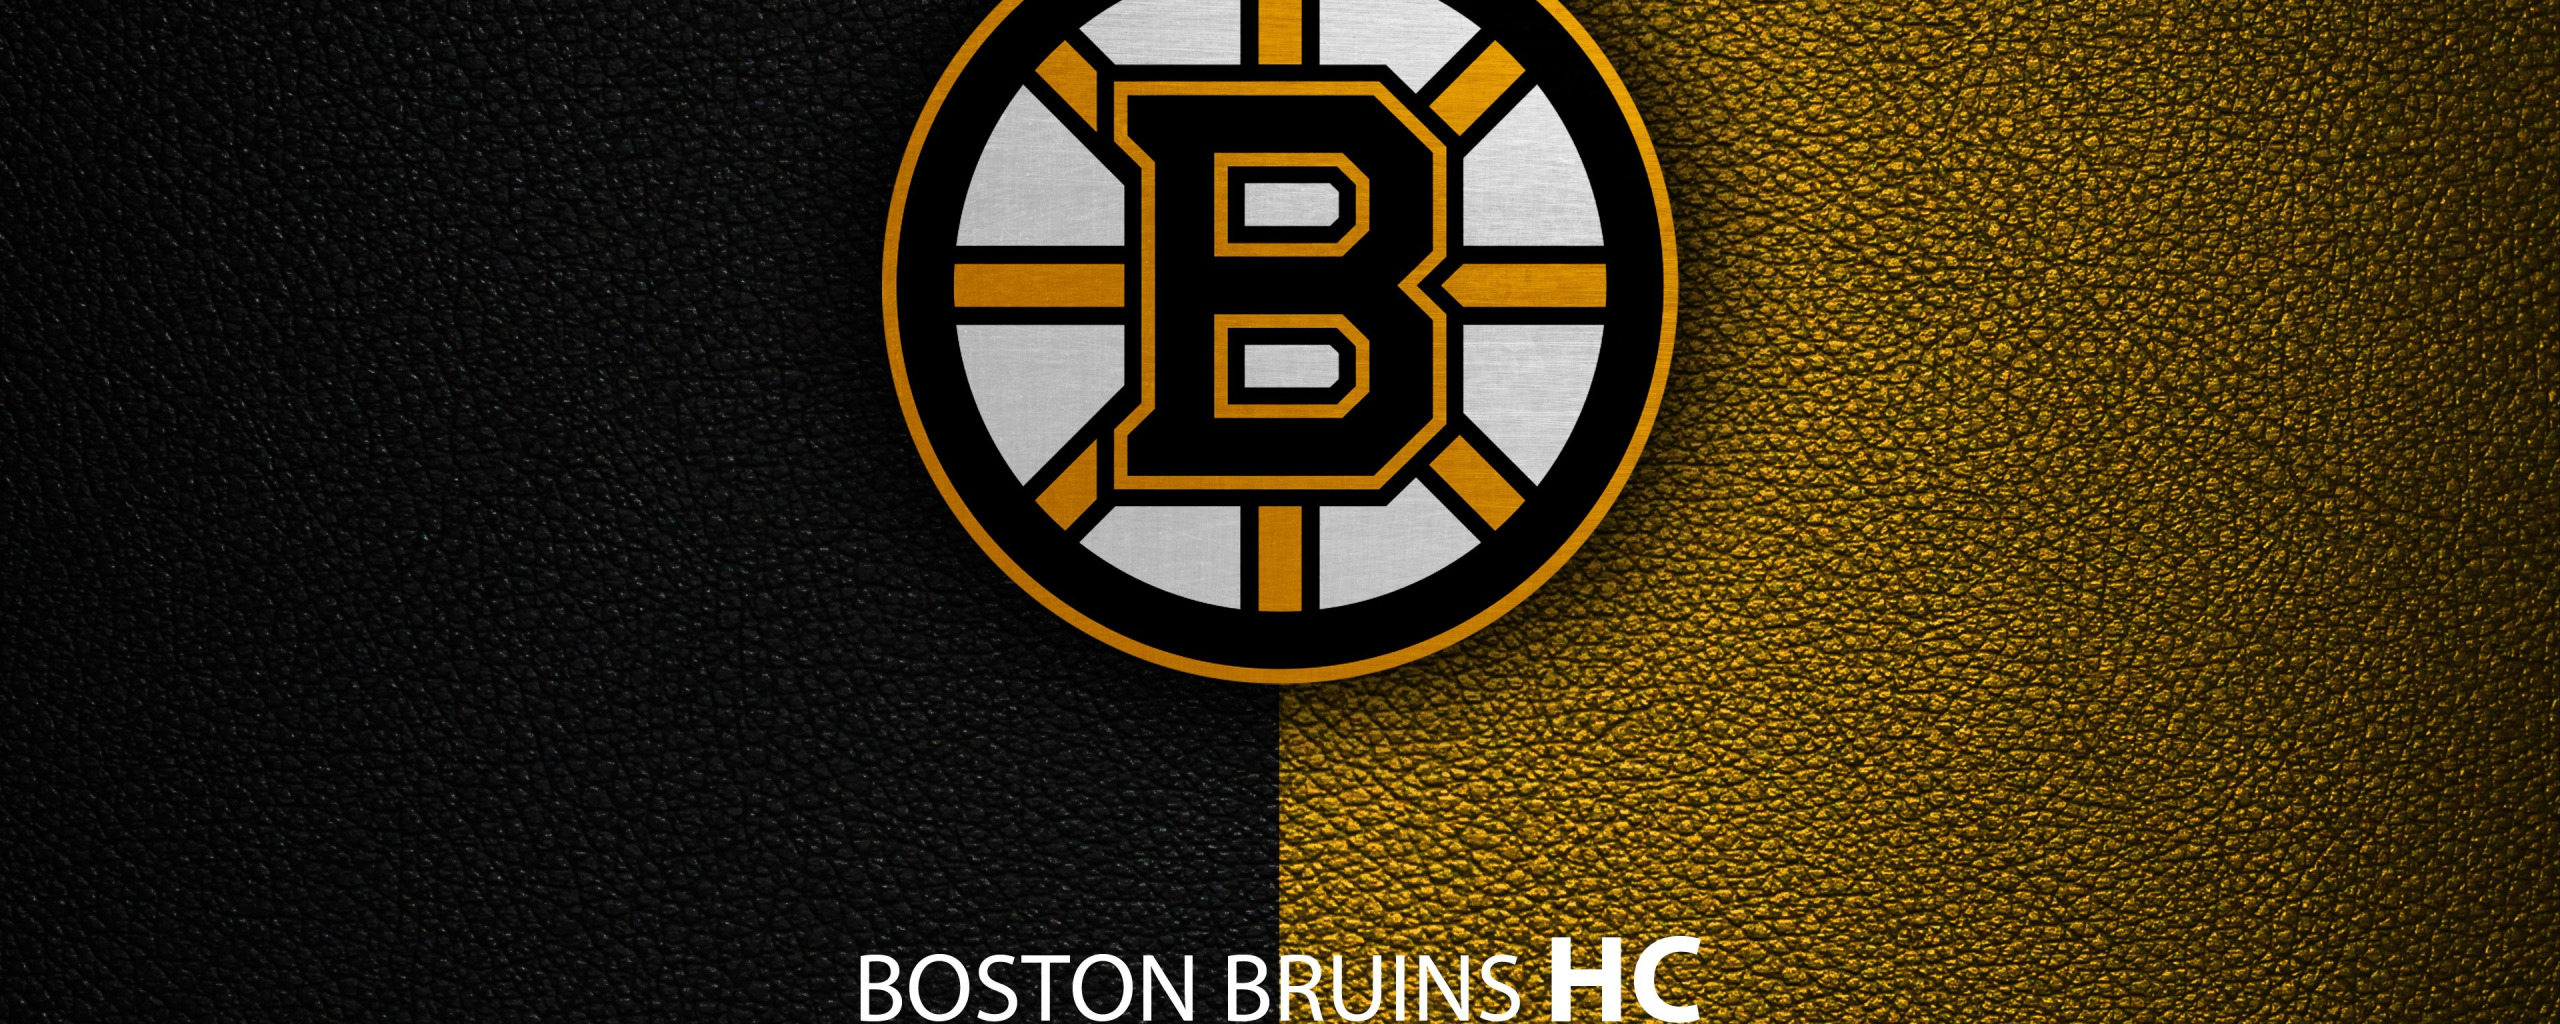 wallpaper, sport, logo, NHL, hockey, Boston Bruins. 